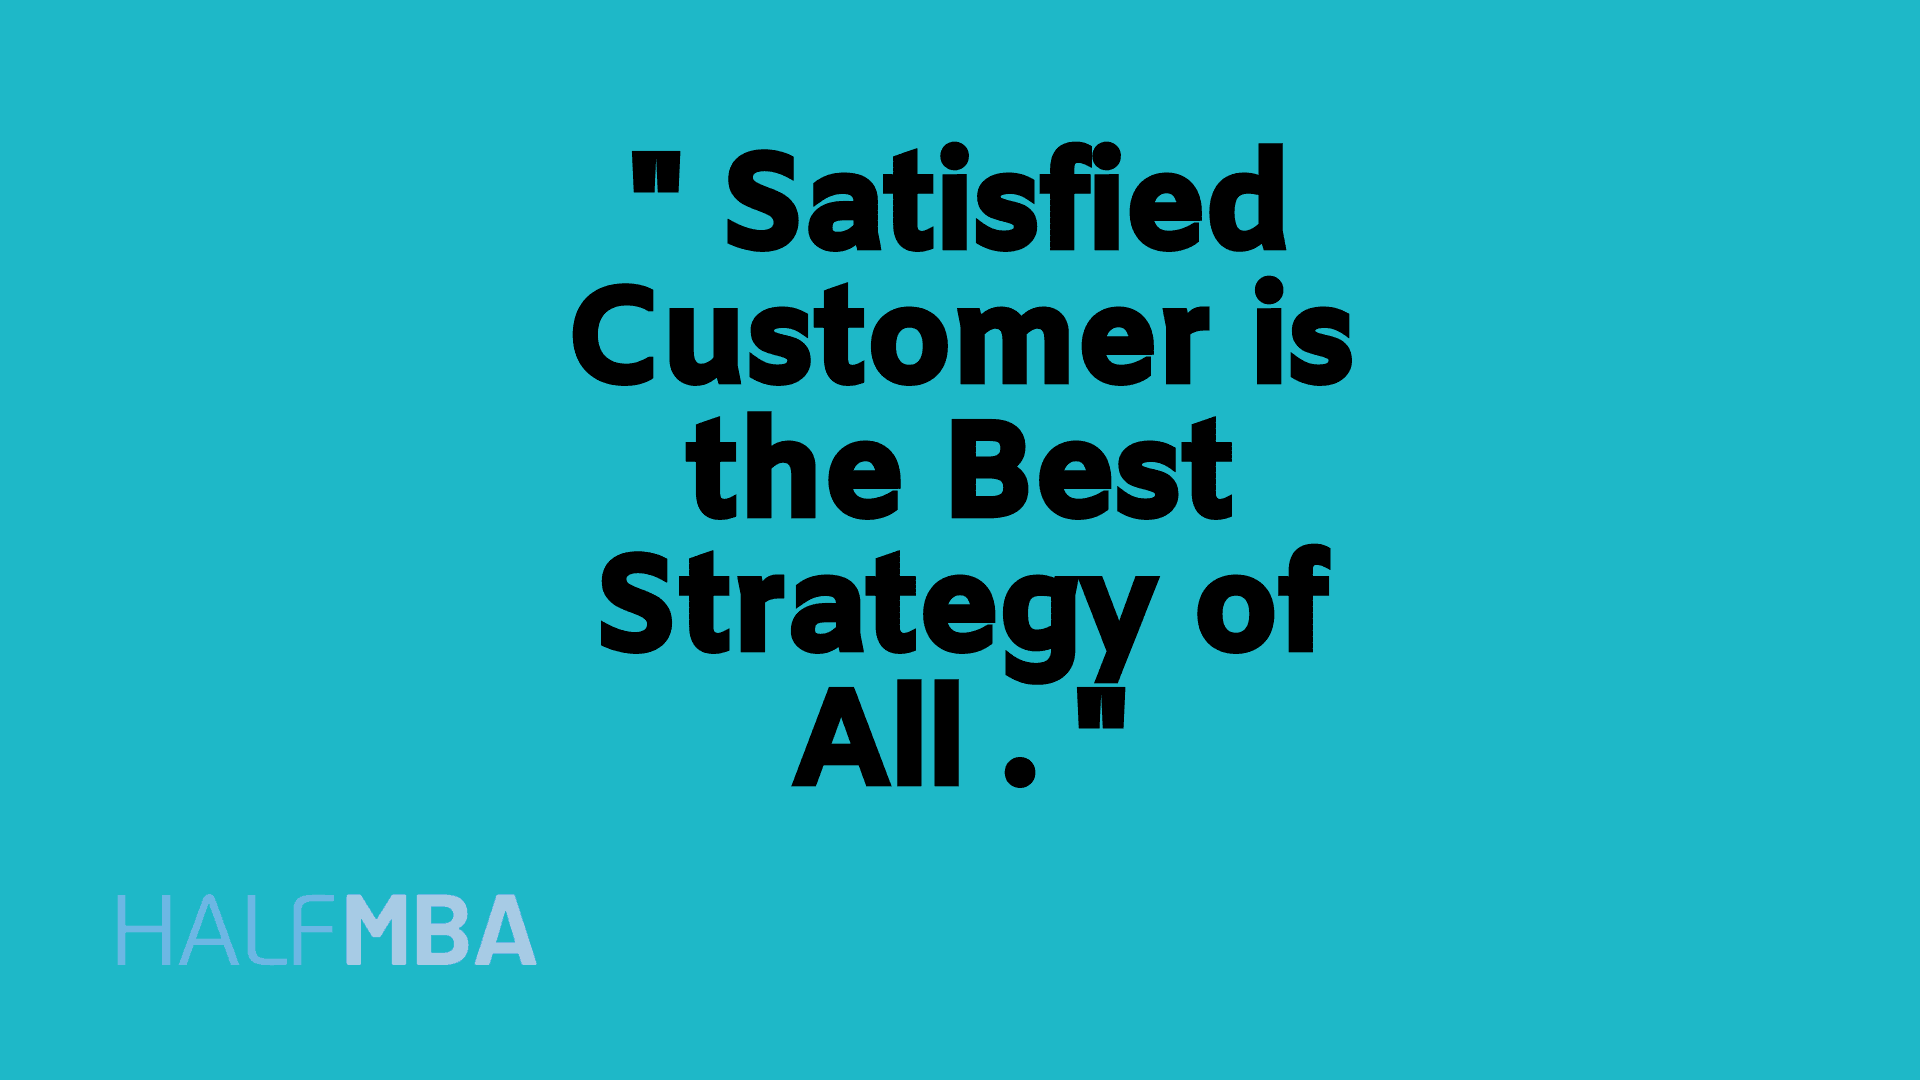 Satisfied customer is a good customer